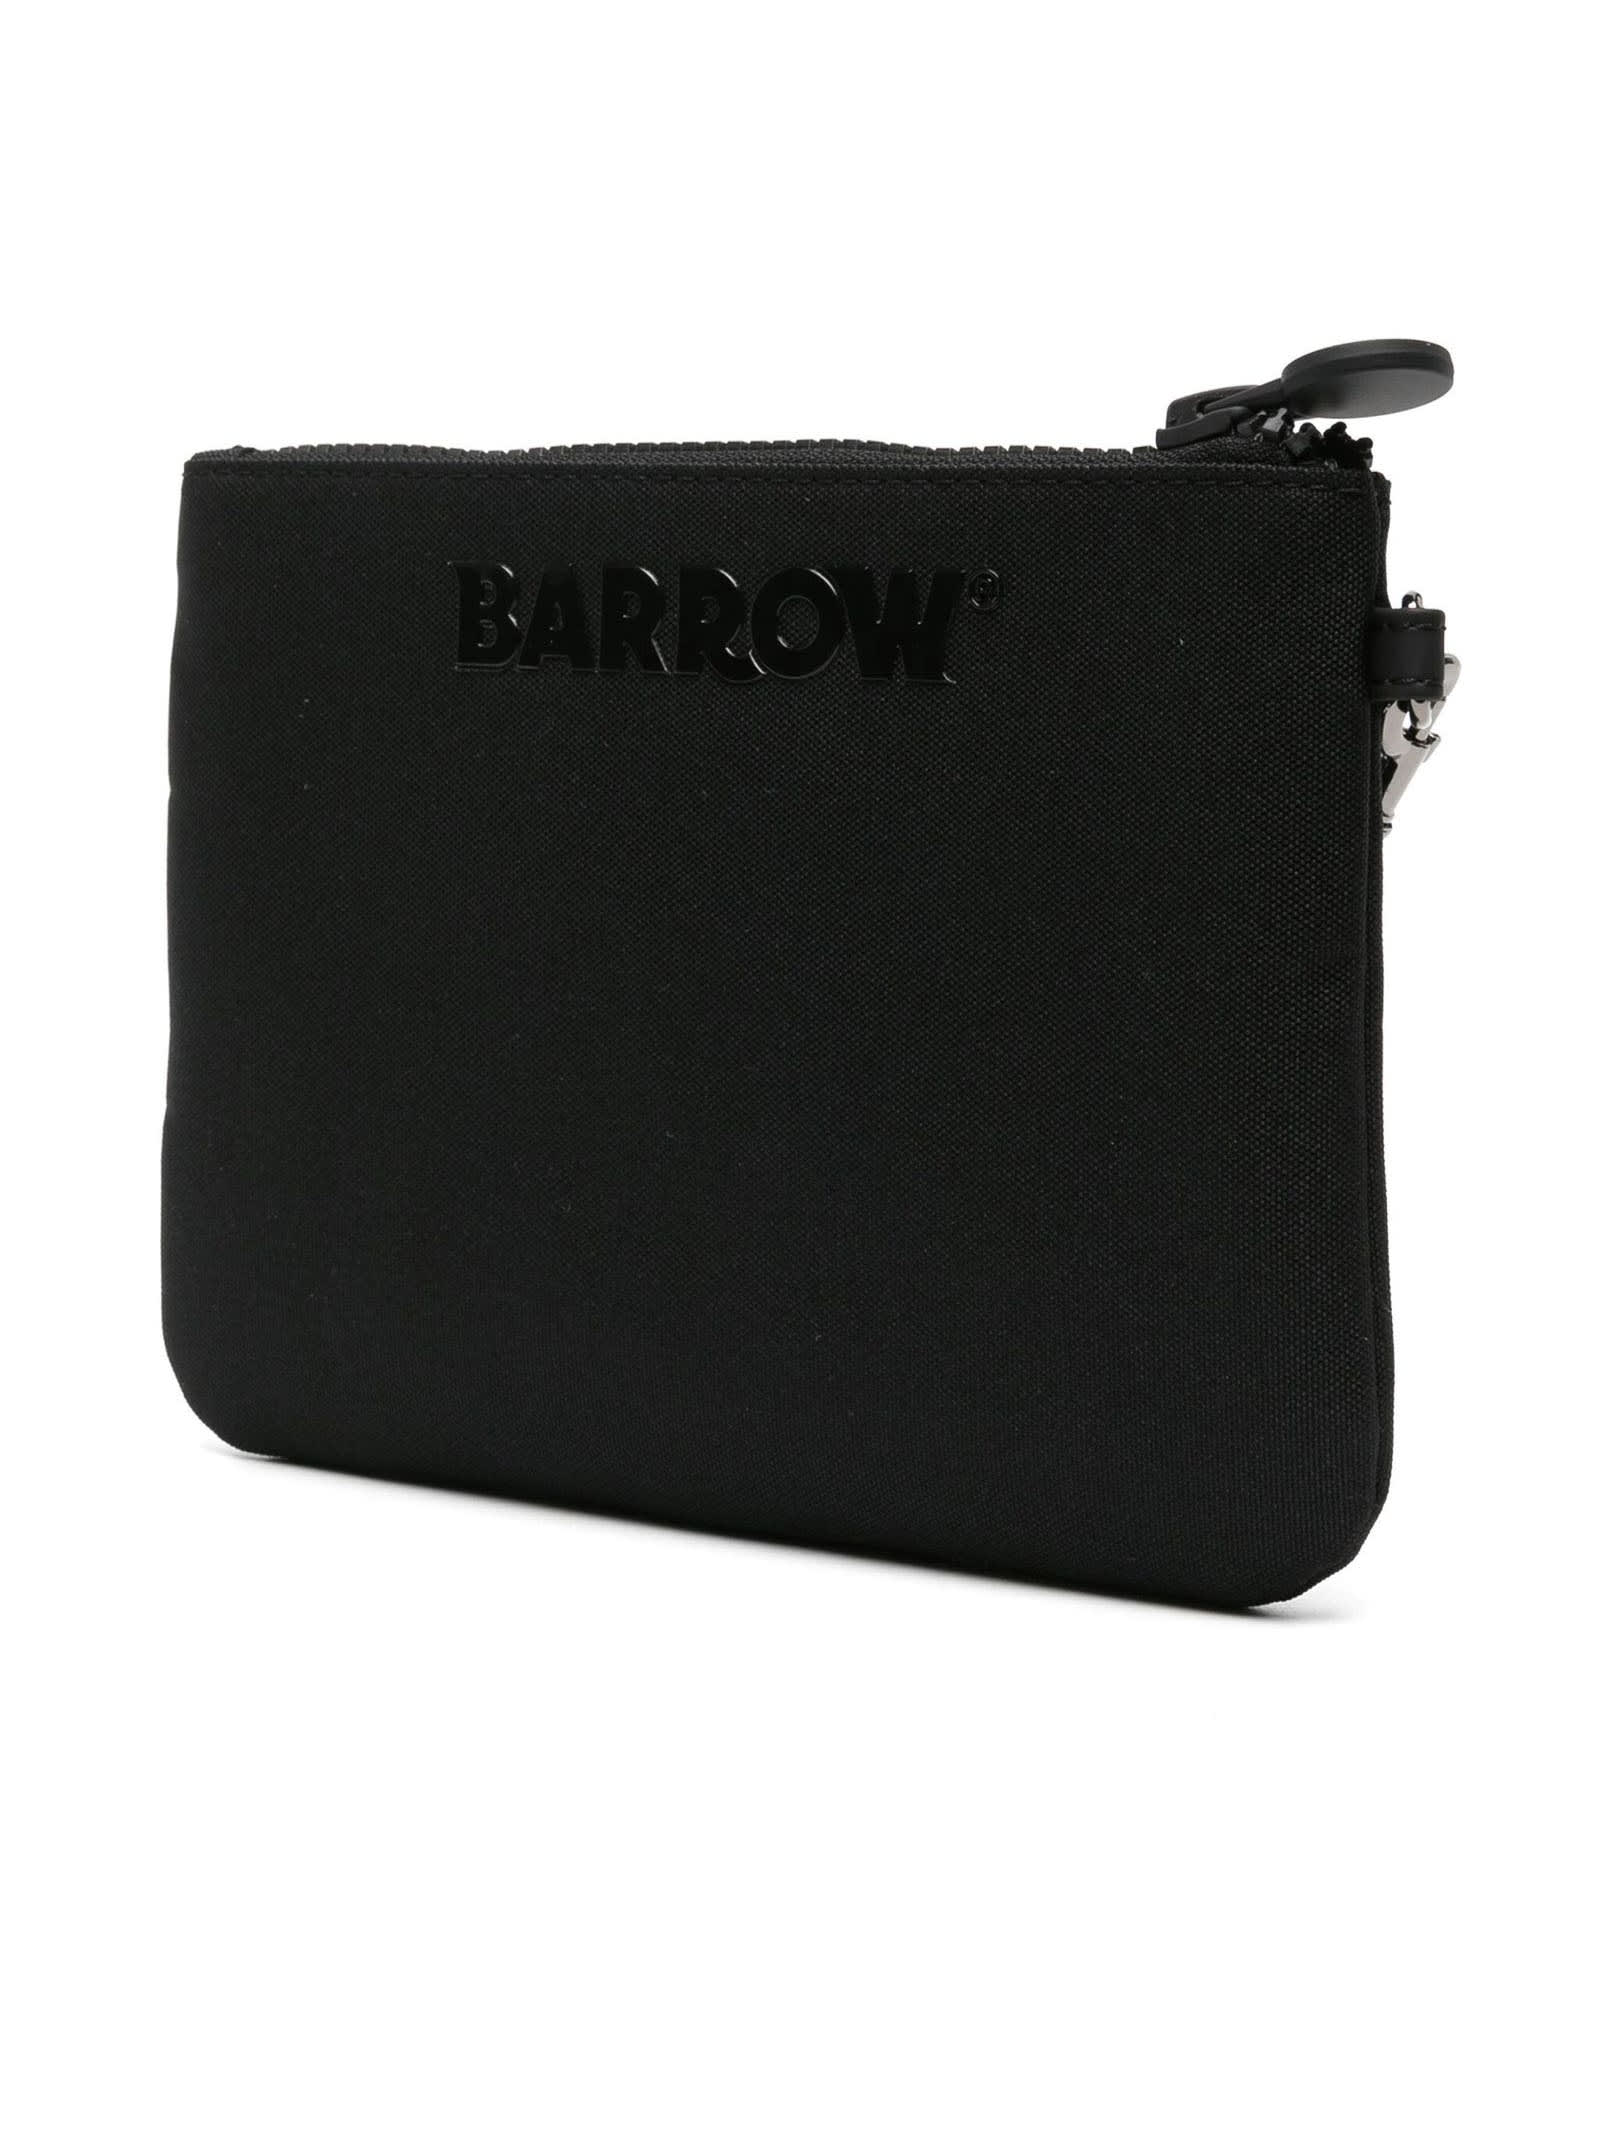 Shop Barrow Bags.. Black